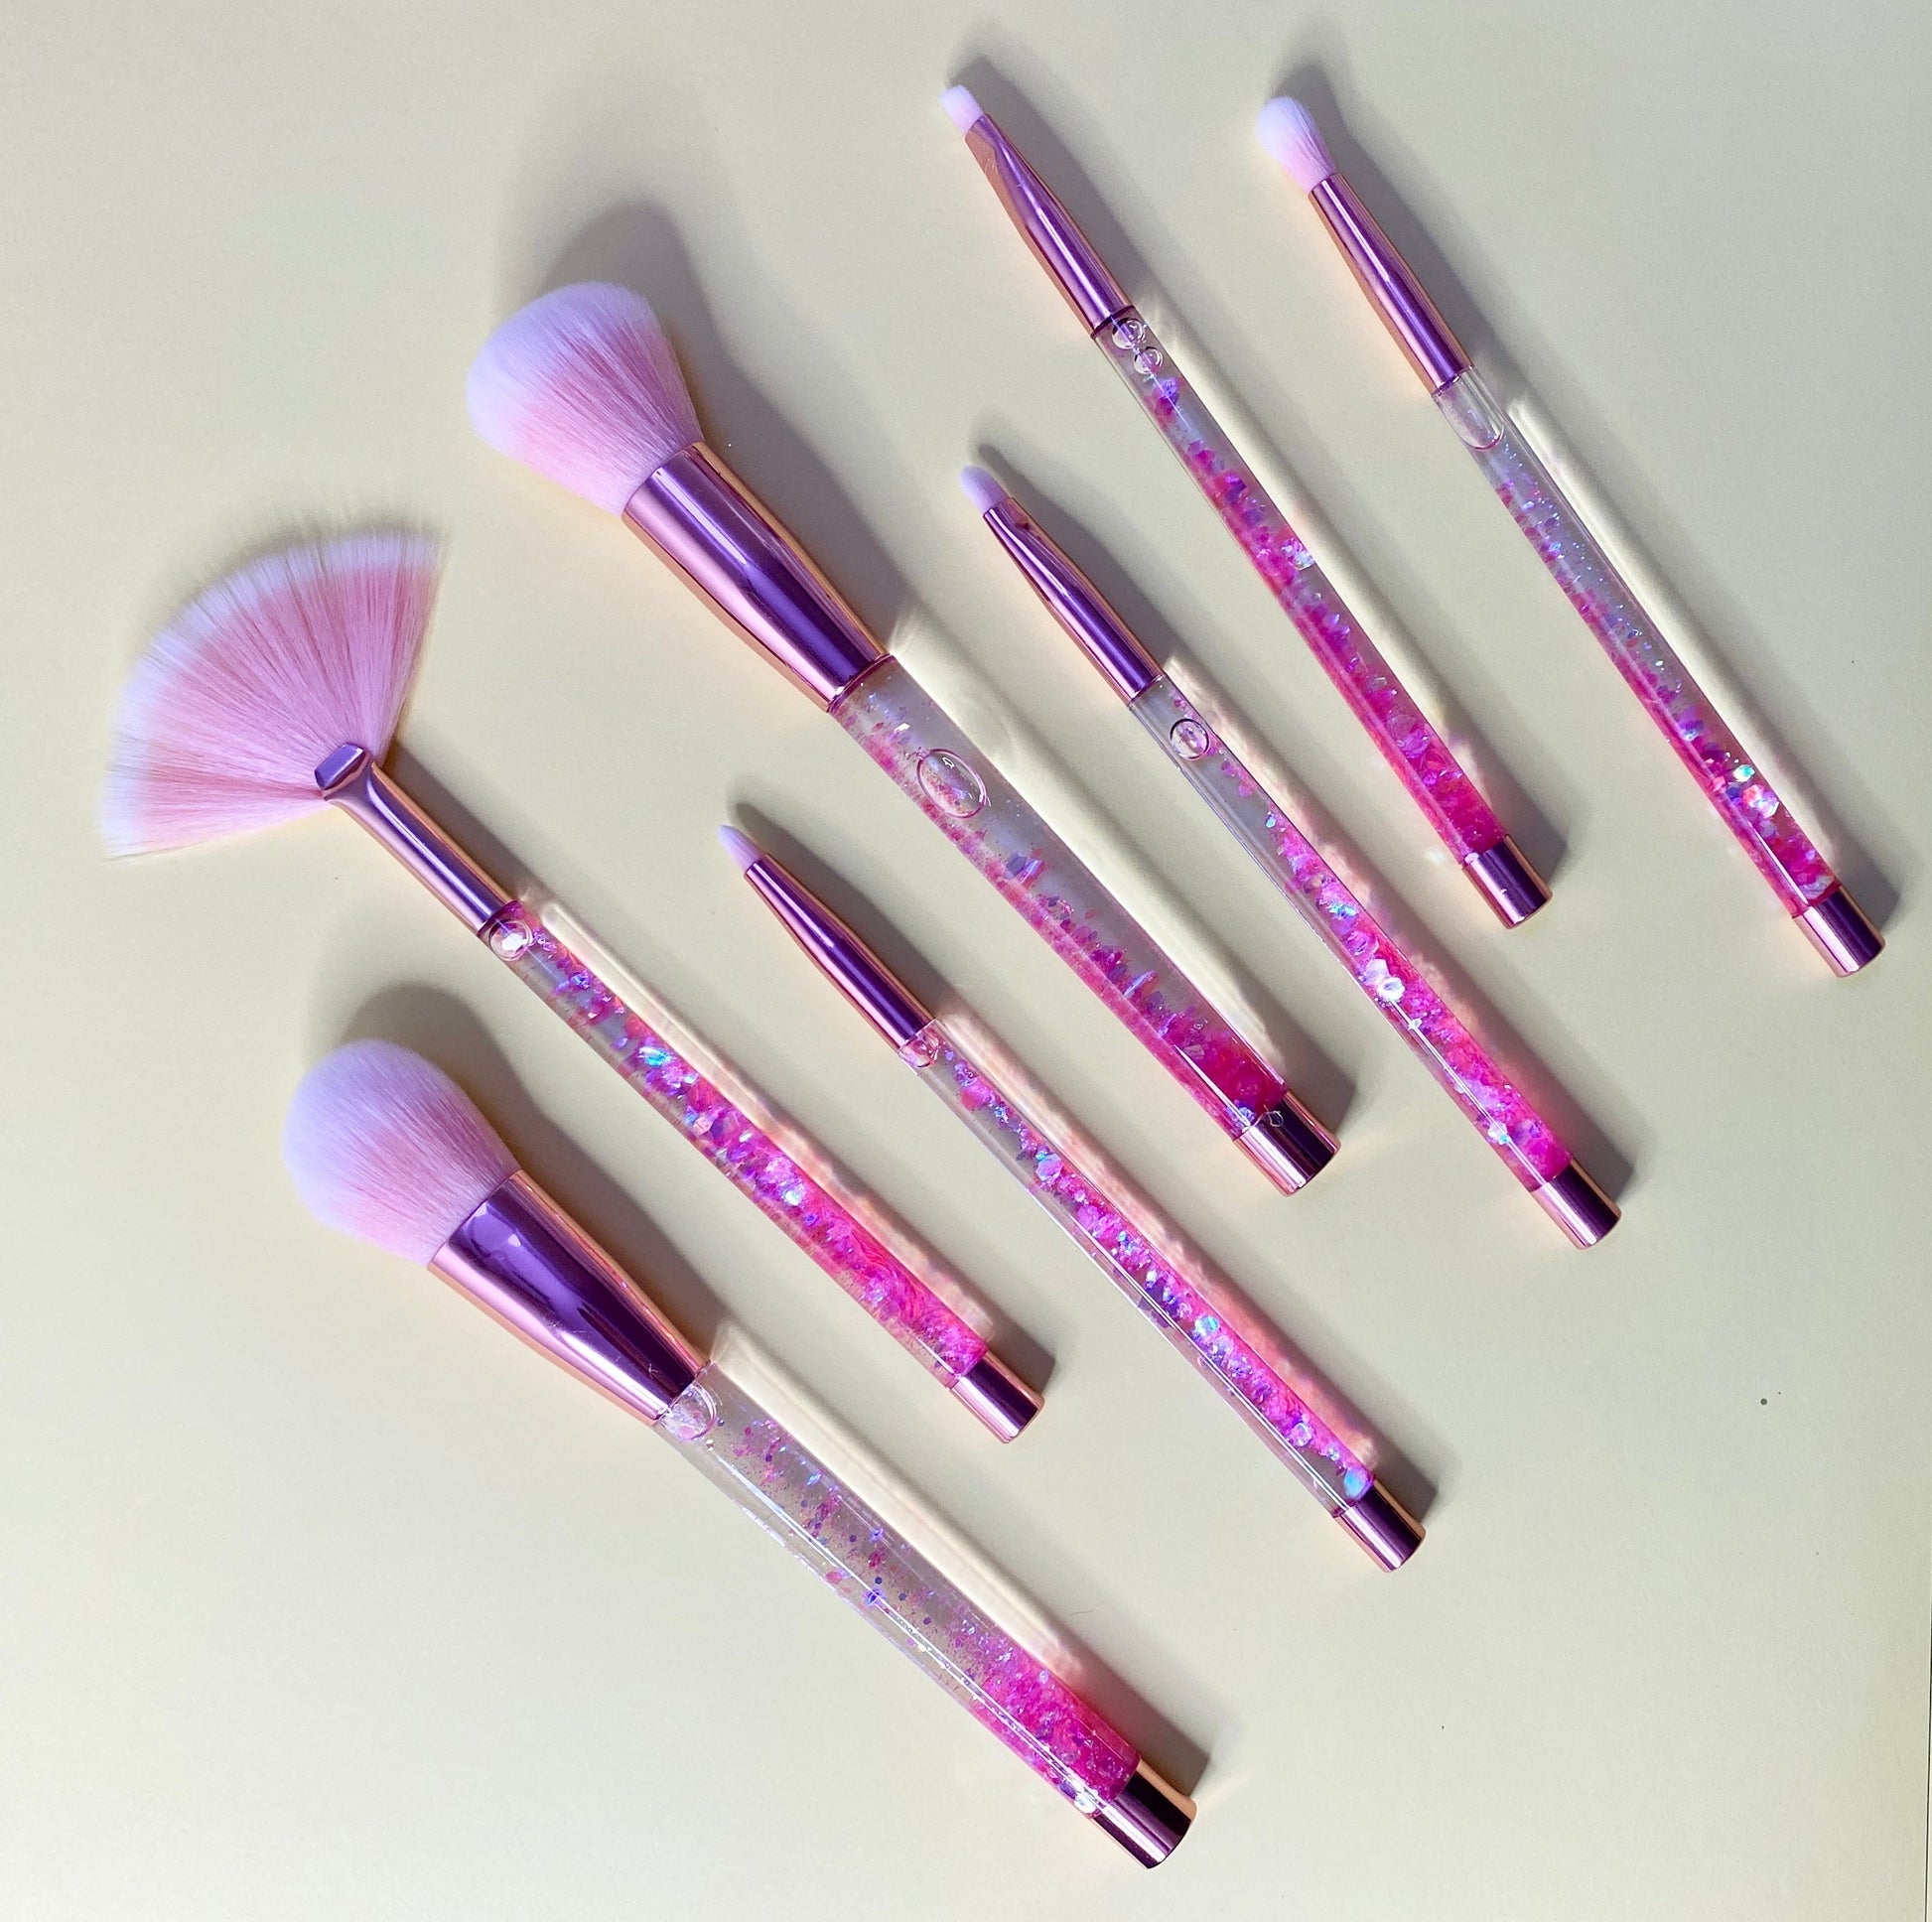 Sparkling Glitter Liquid Cosmetic Makeup Brush Set Makeup Brushes Pink Sweetheart